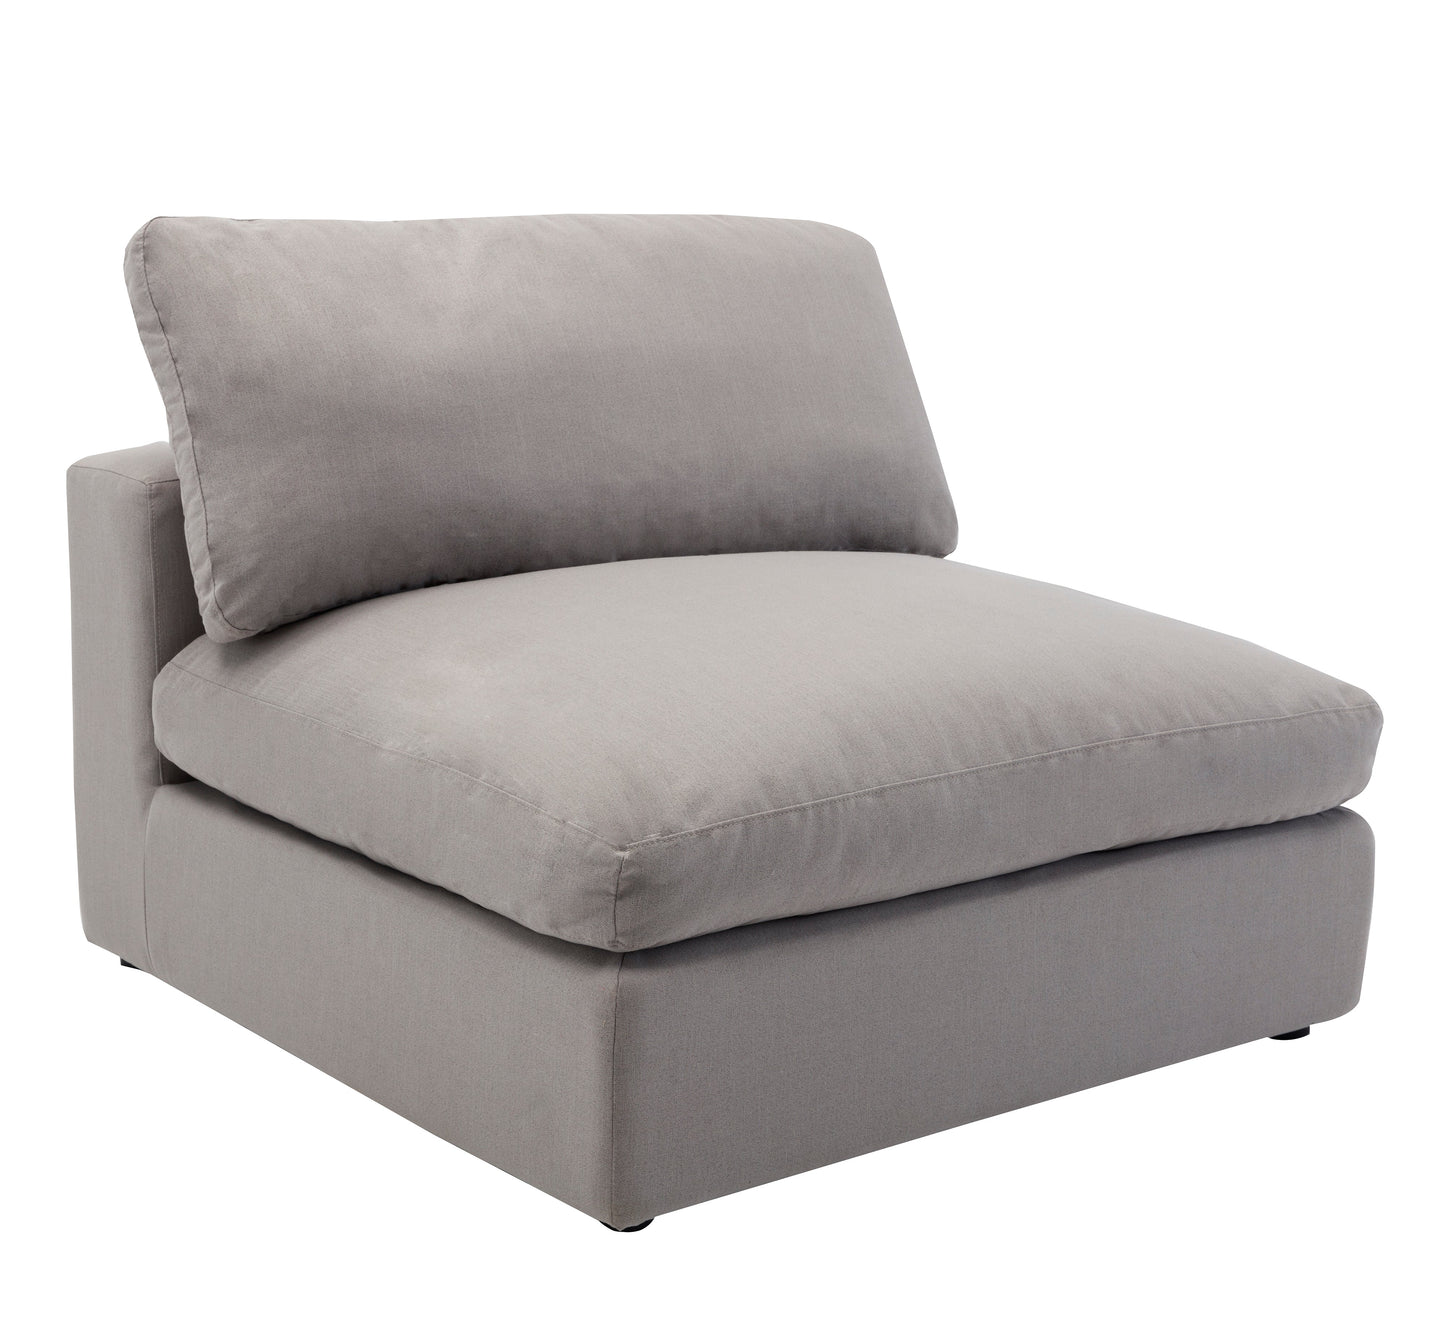 Rivas Contemporary Feather Fill 7-Piece Modular Sectional Sofa with Ottoman, Graphite